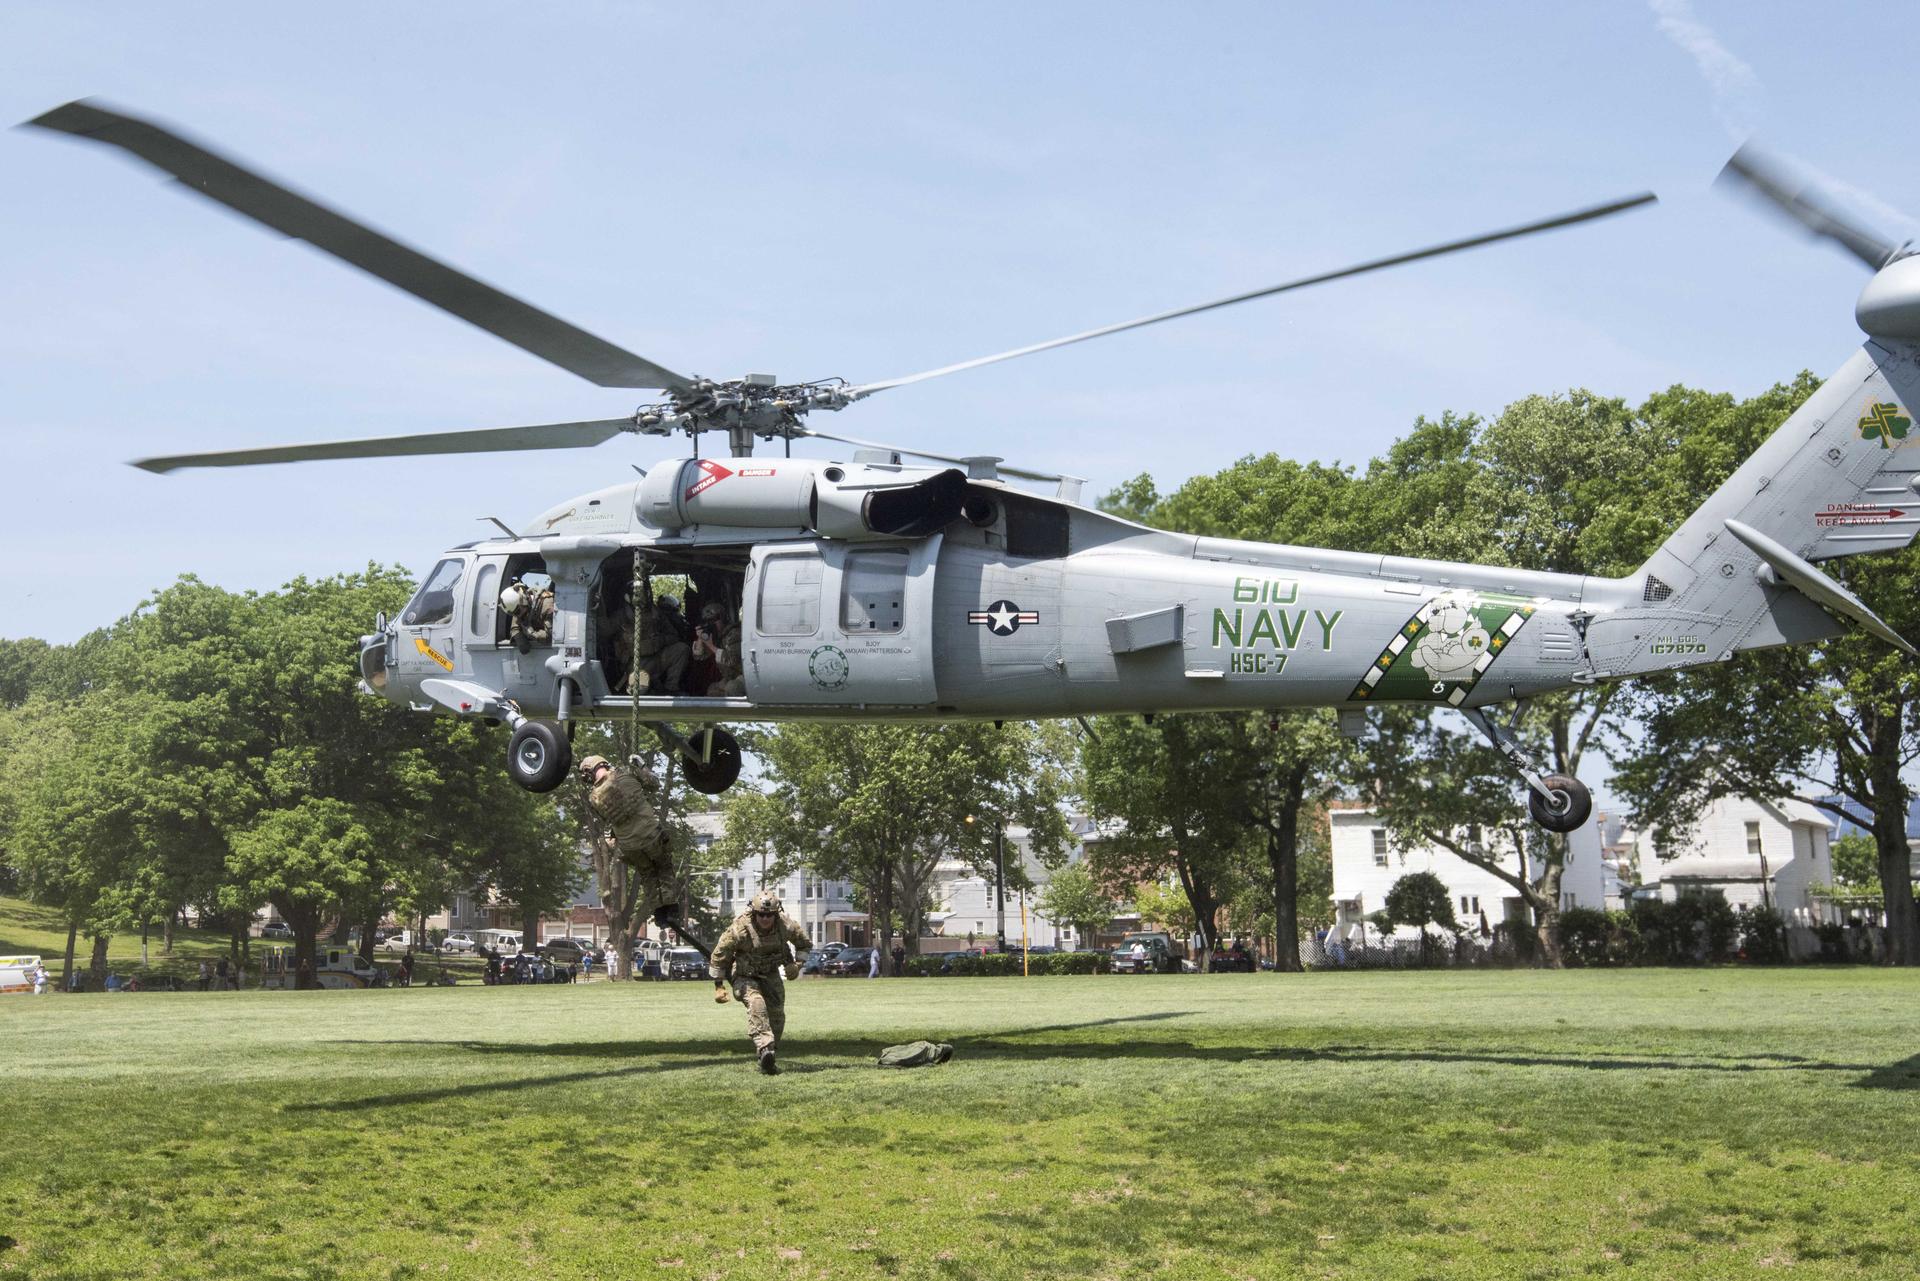 US Navy helicopter, Fleet Week New York